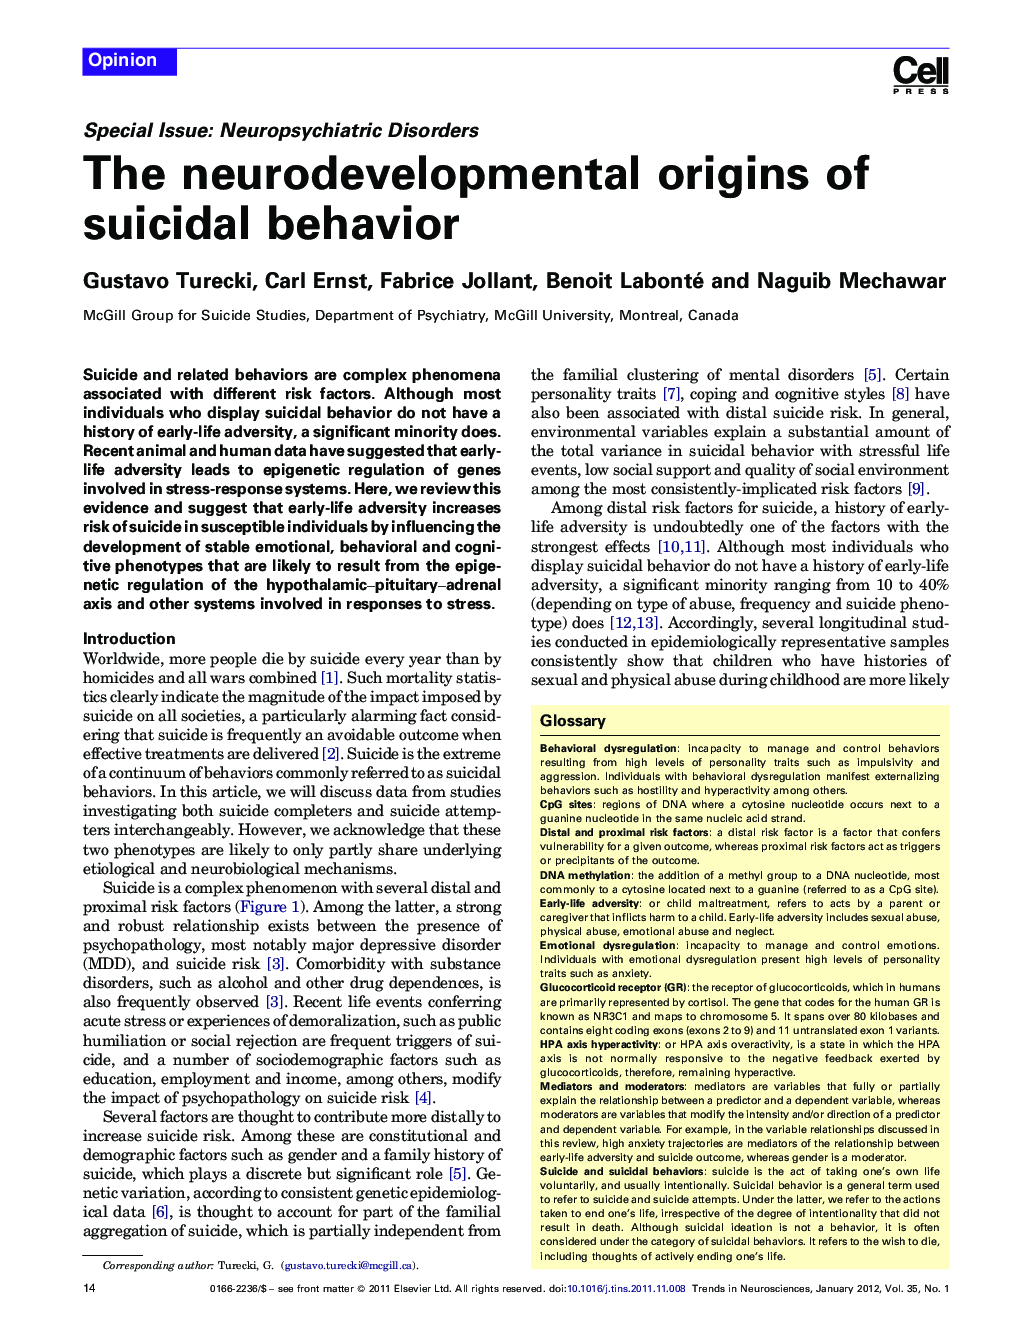 The neurodevelopmental origins of suicidal behavior